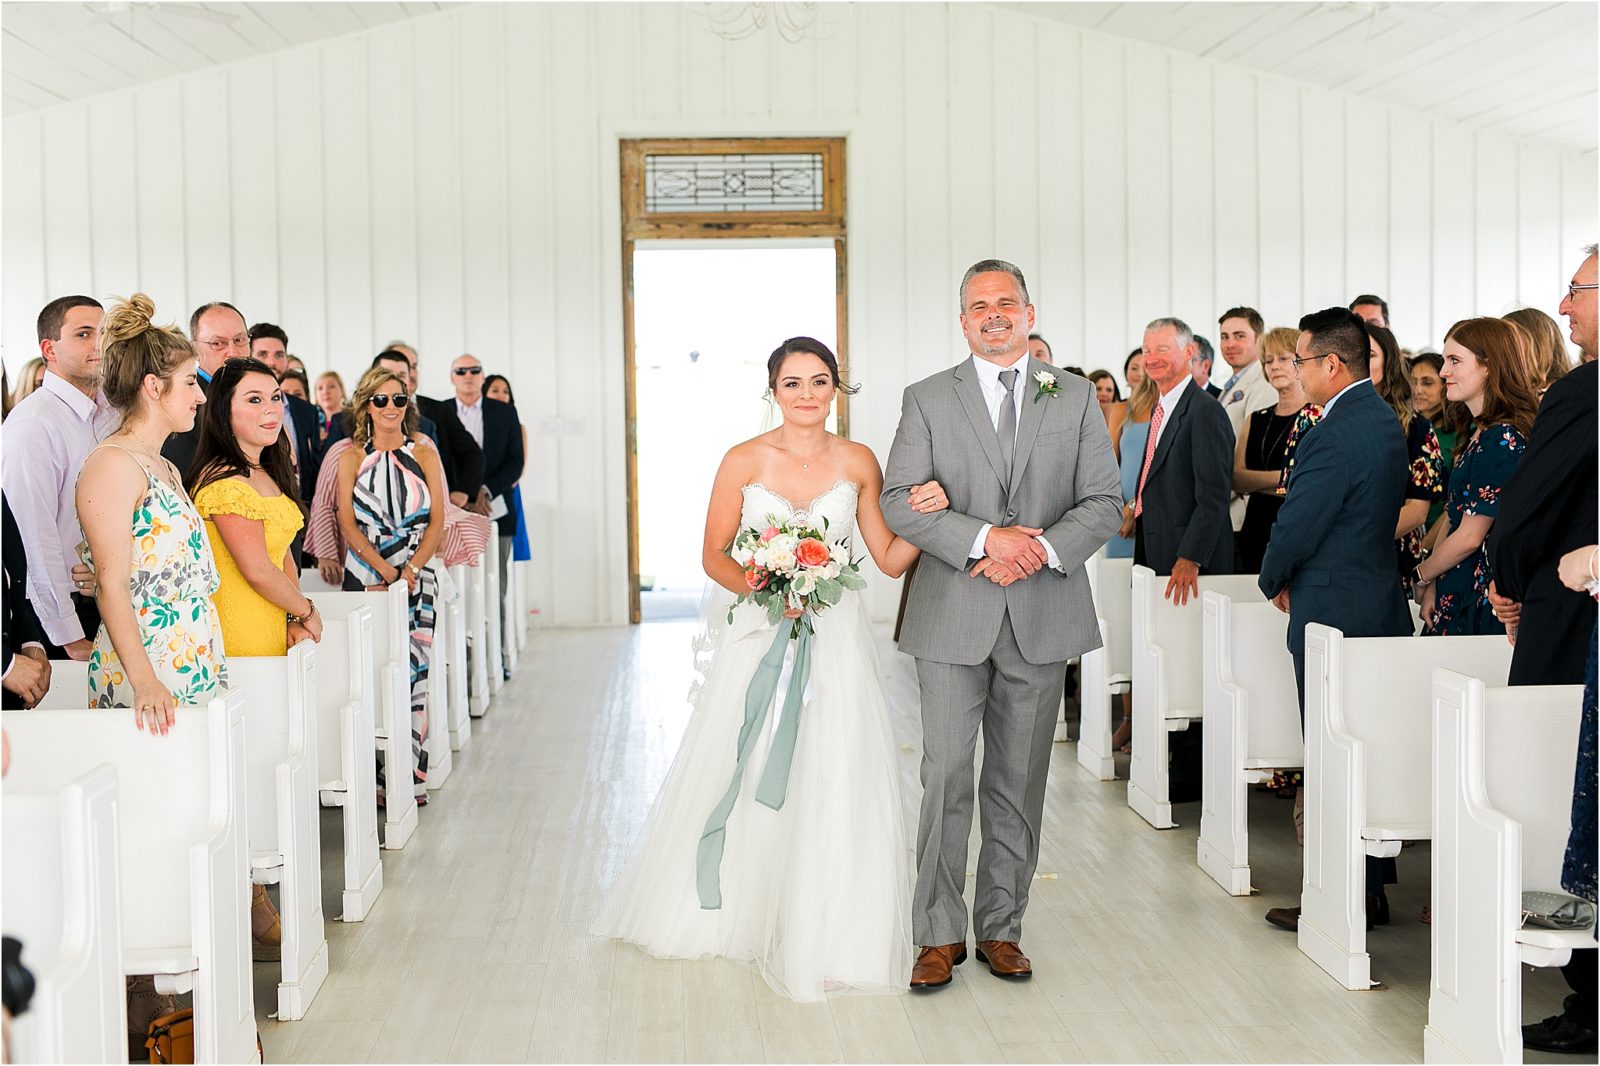 Grand Ivory Wedding Ceremony by McKinney Wedding Photographer Jillian Hogan with Lovebird Lane Events